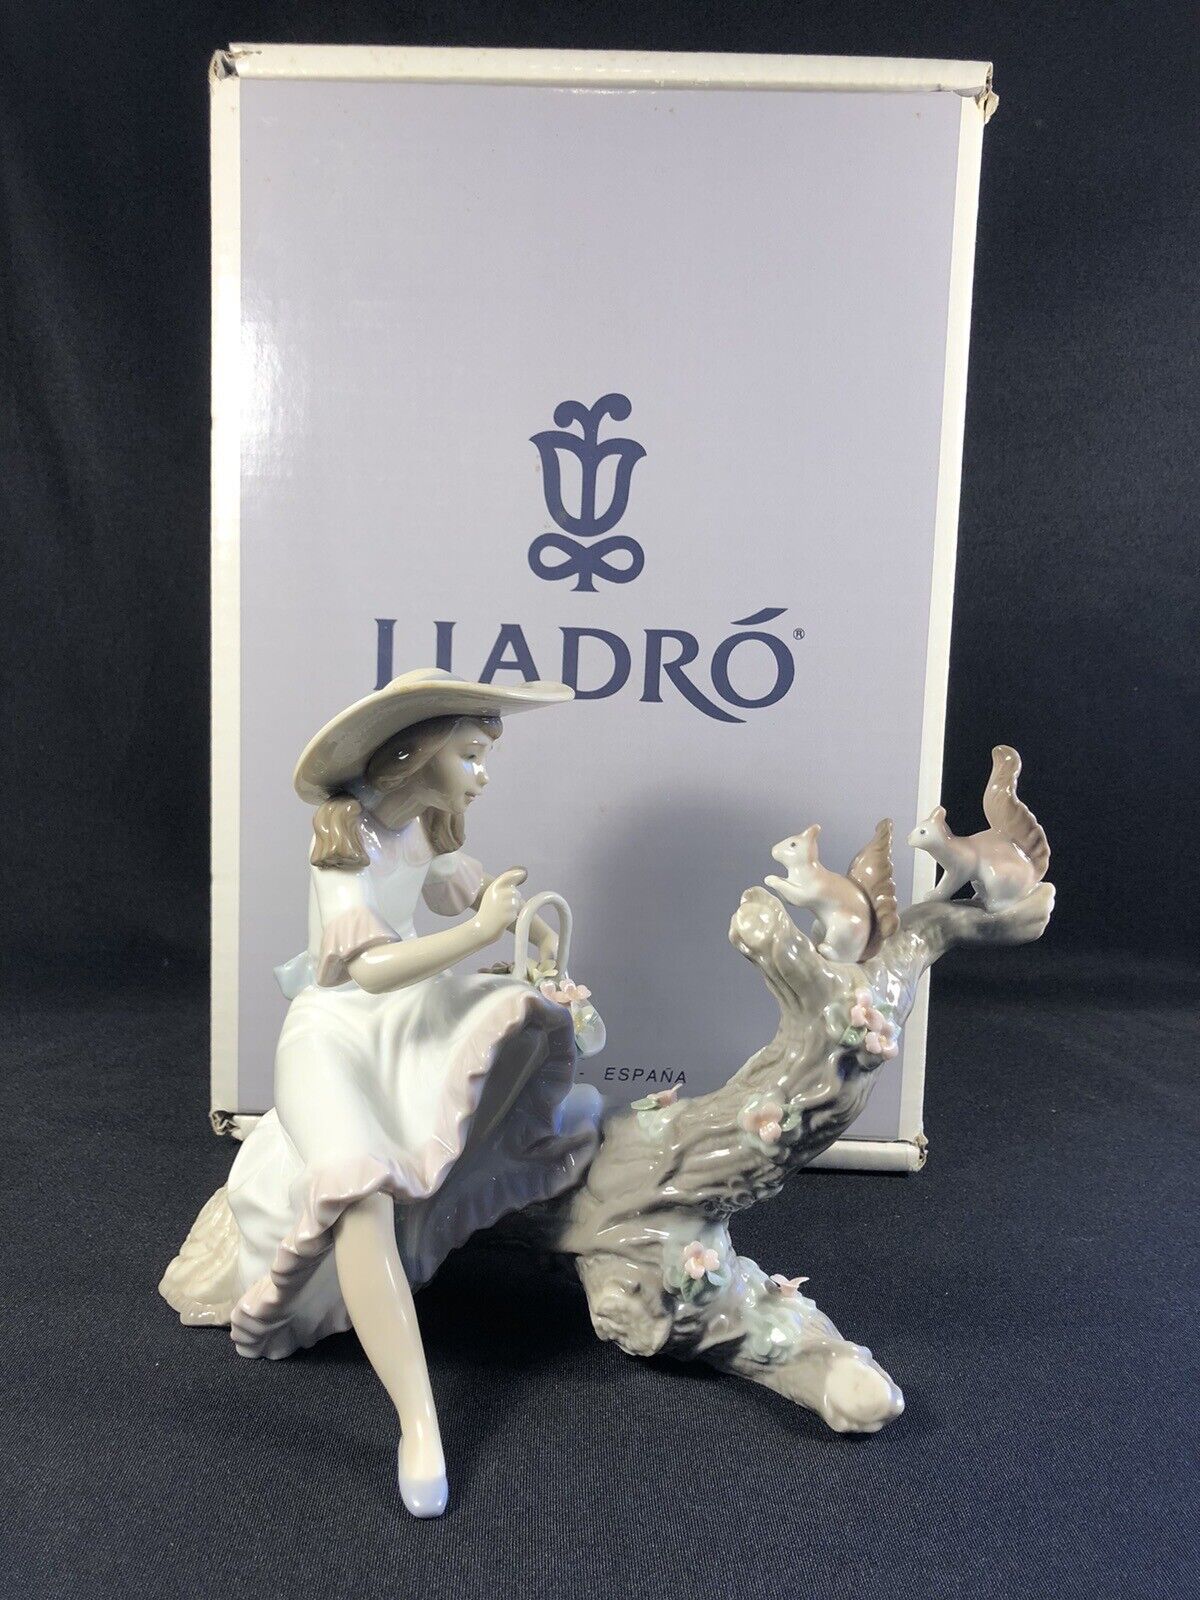 MIB LLADRO 6140 SPRINGTIME FRIENDS GIRL SQUIRRELS FIGURINE - SPAIN - RETIRED